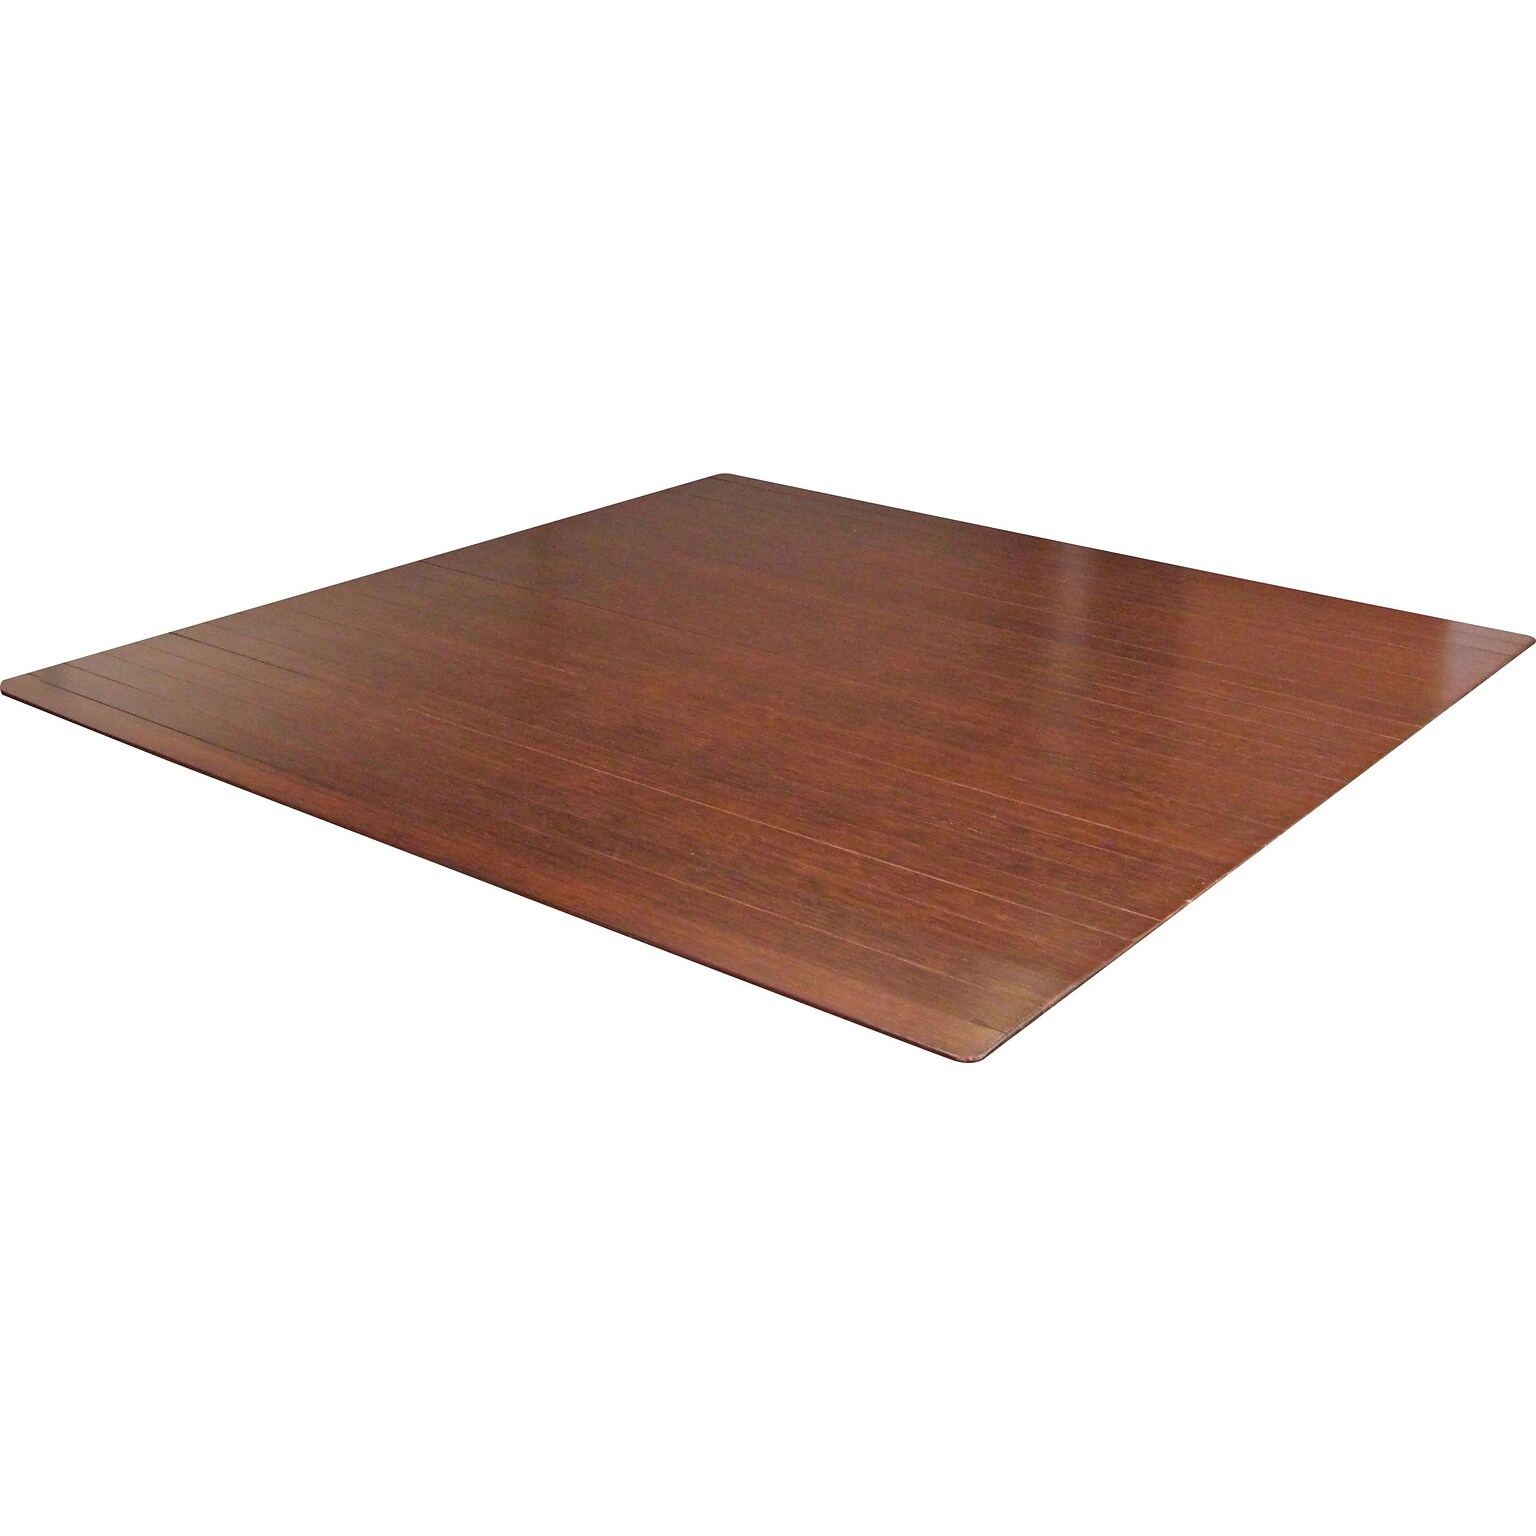 Anji Mountain Standard Bamboo Roll-Up Chairmat, Rectangular, 48x52, Dark Cherry